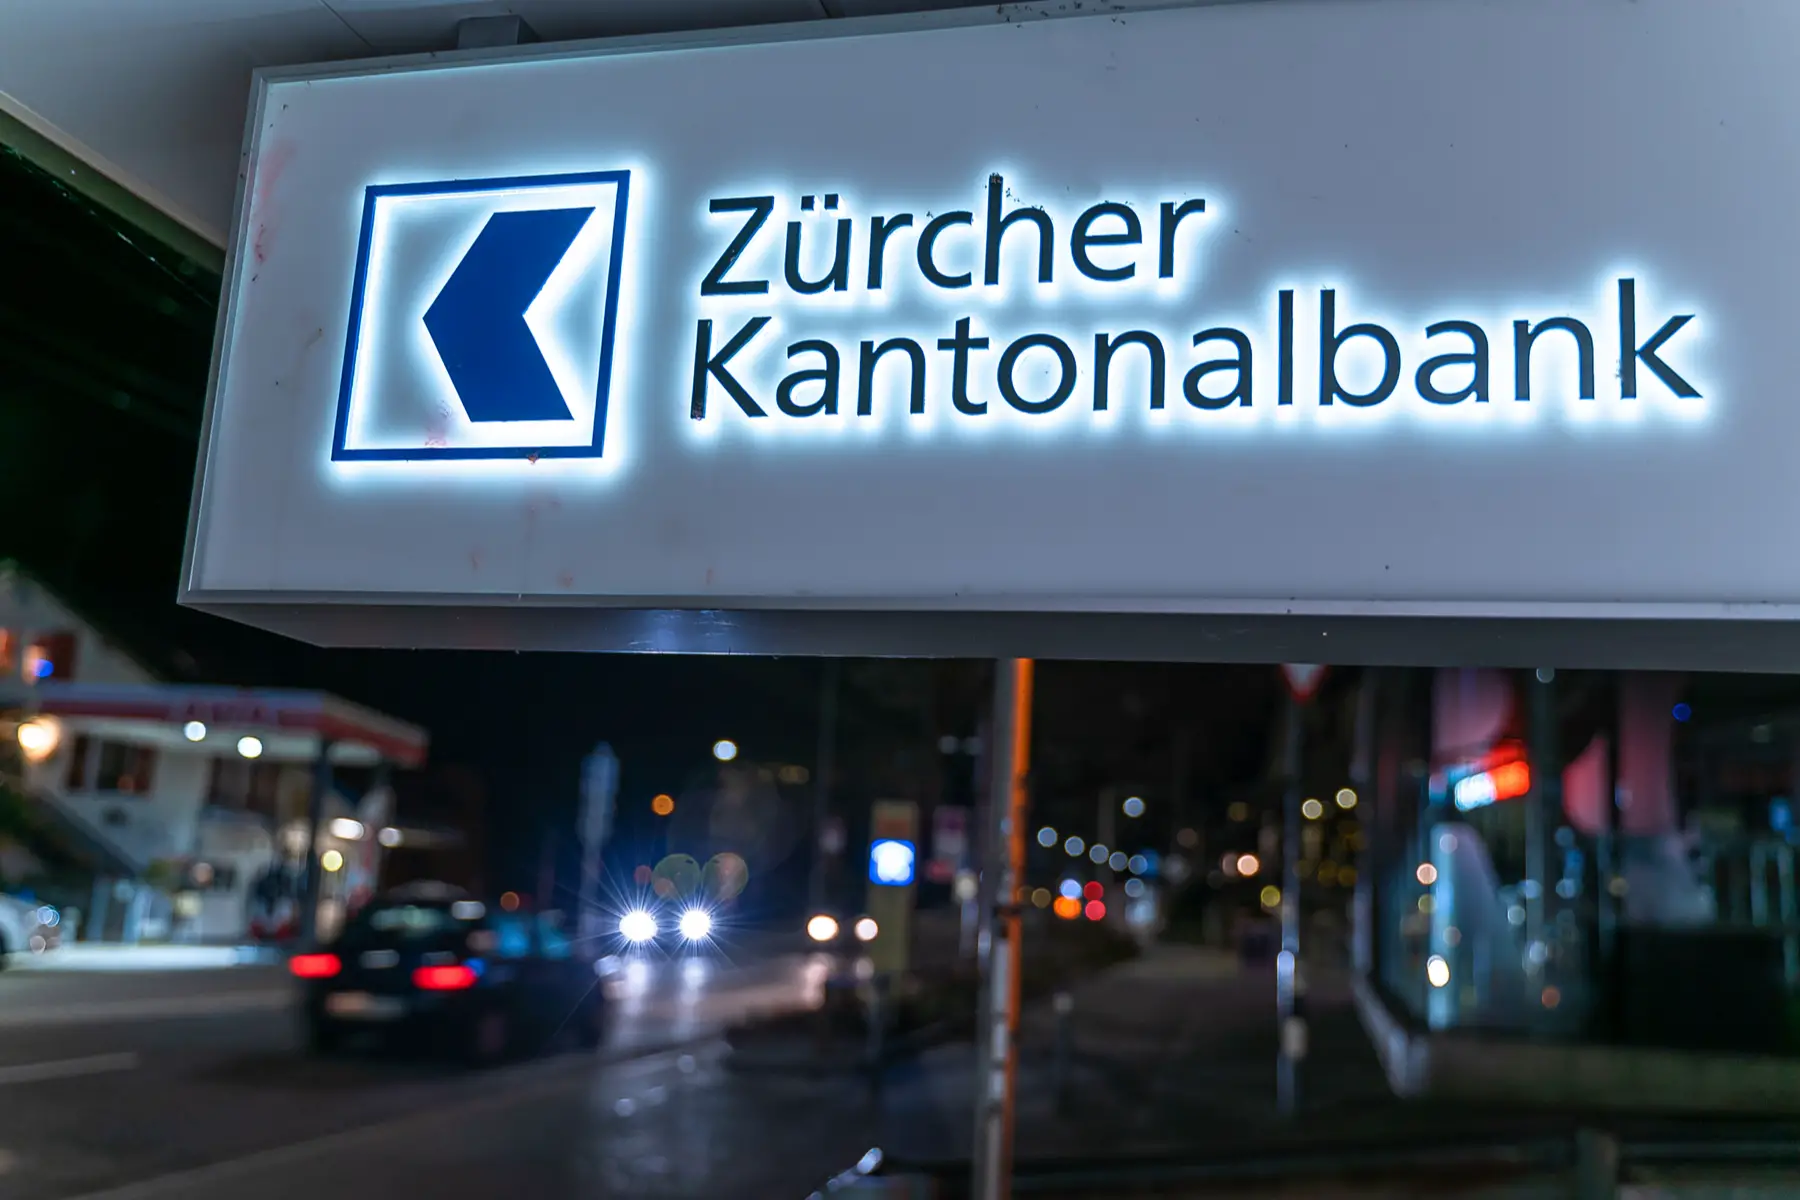 Zürcher Kantonalbank sign